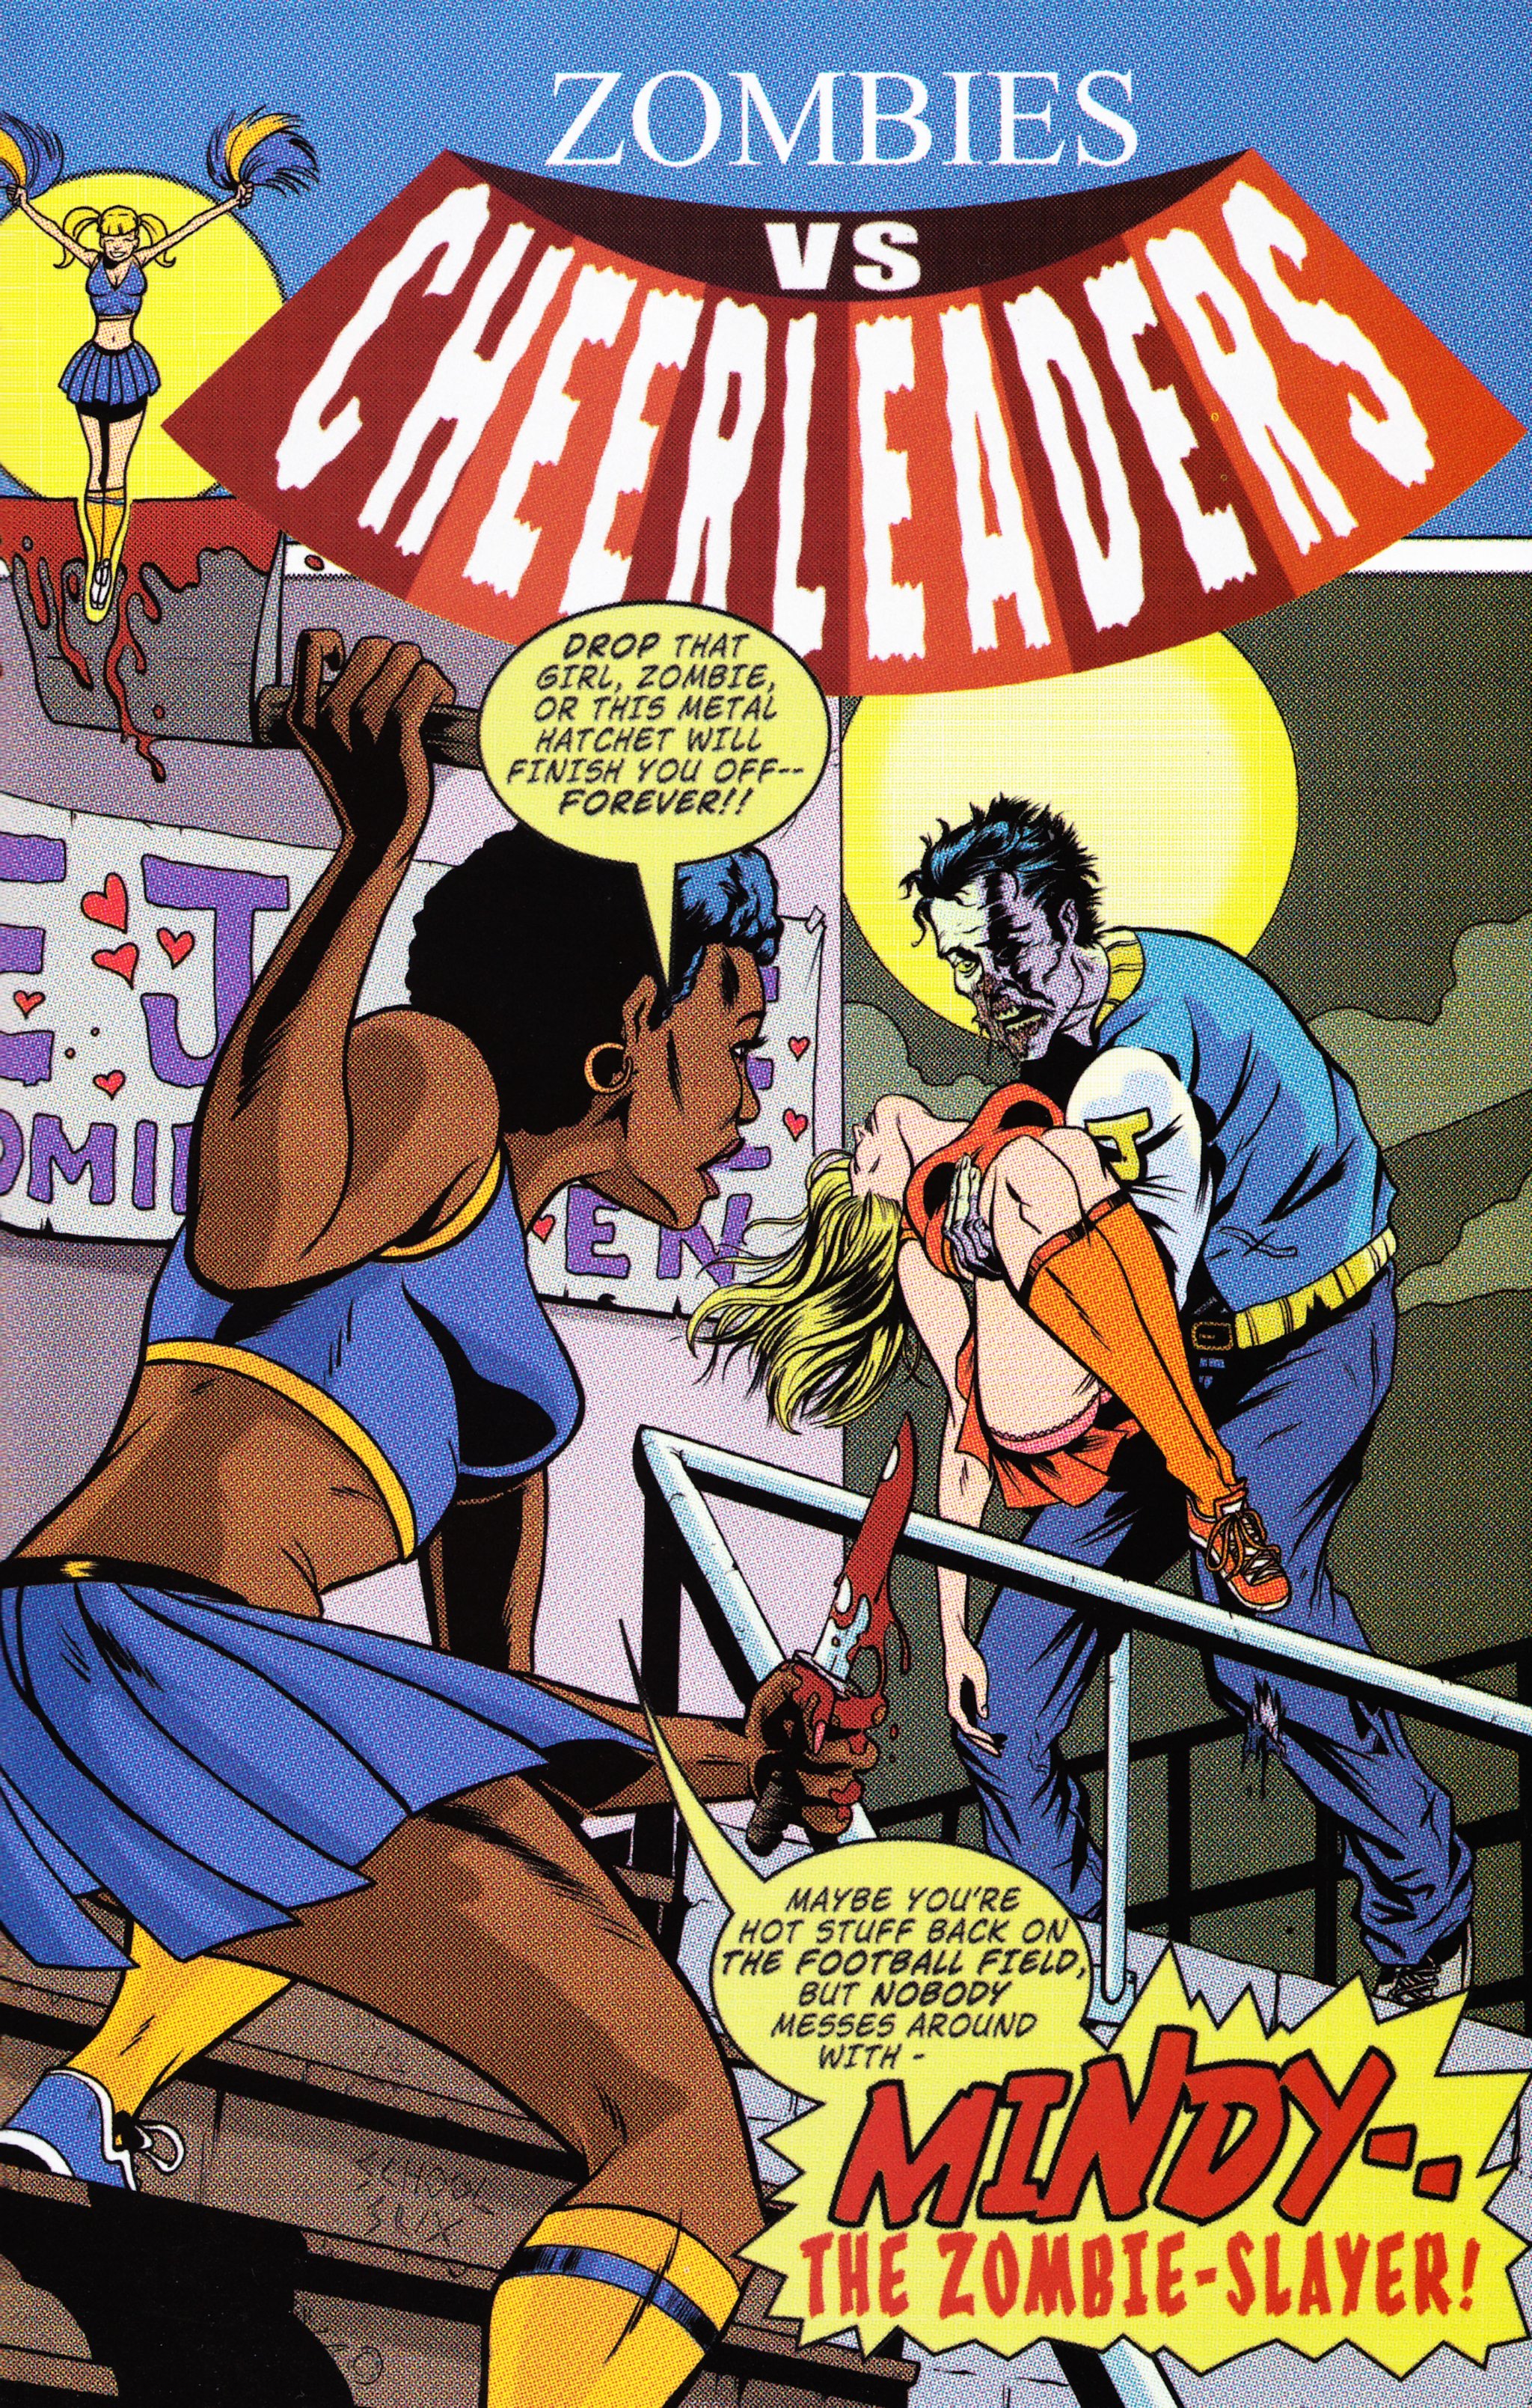 Read online Zombies vs Cheerleaders comic -  Issue #2 - 30